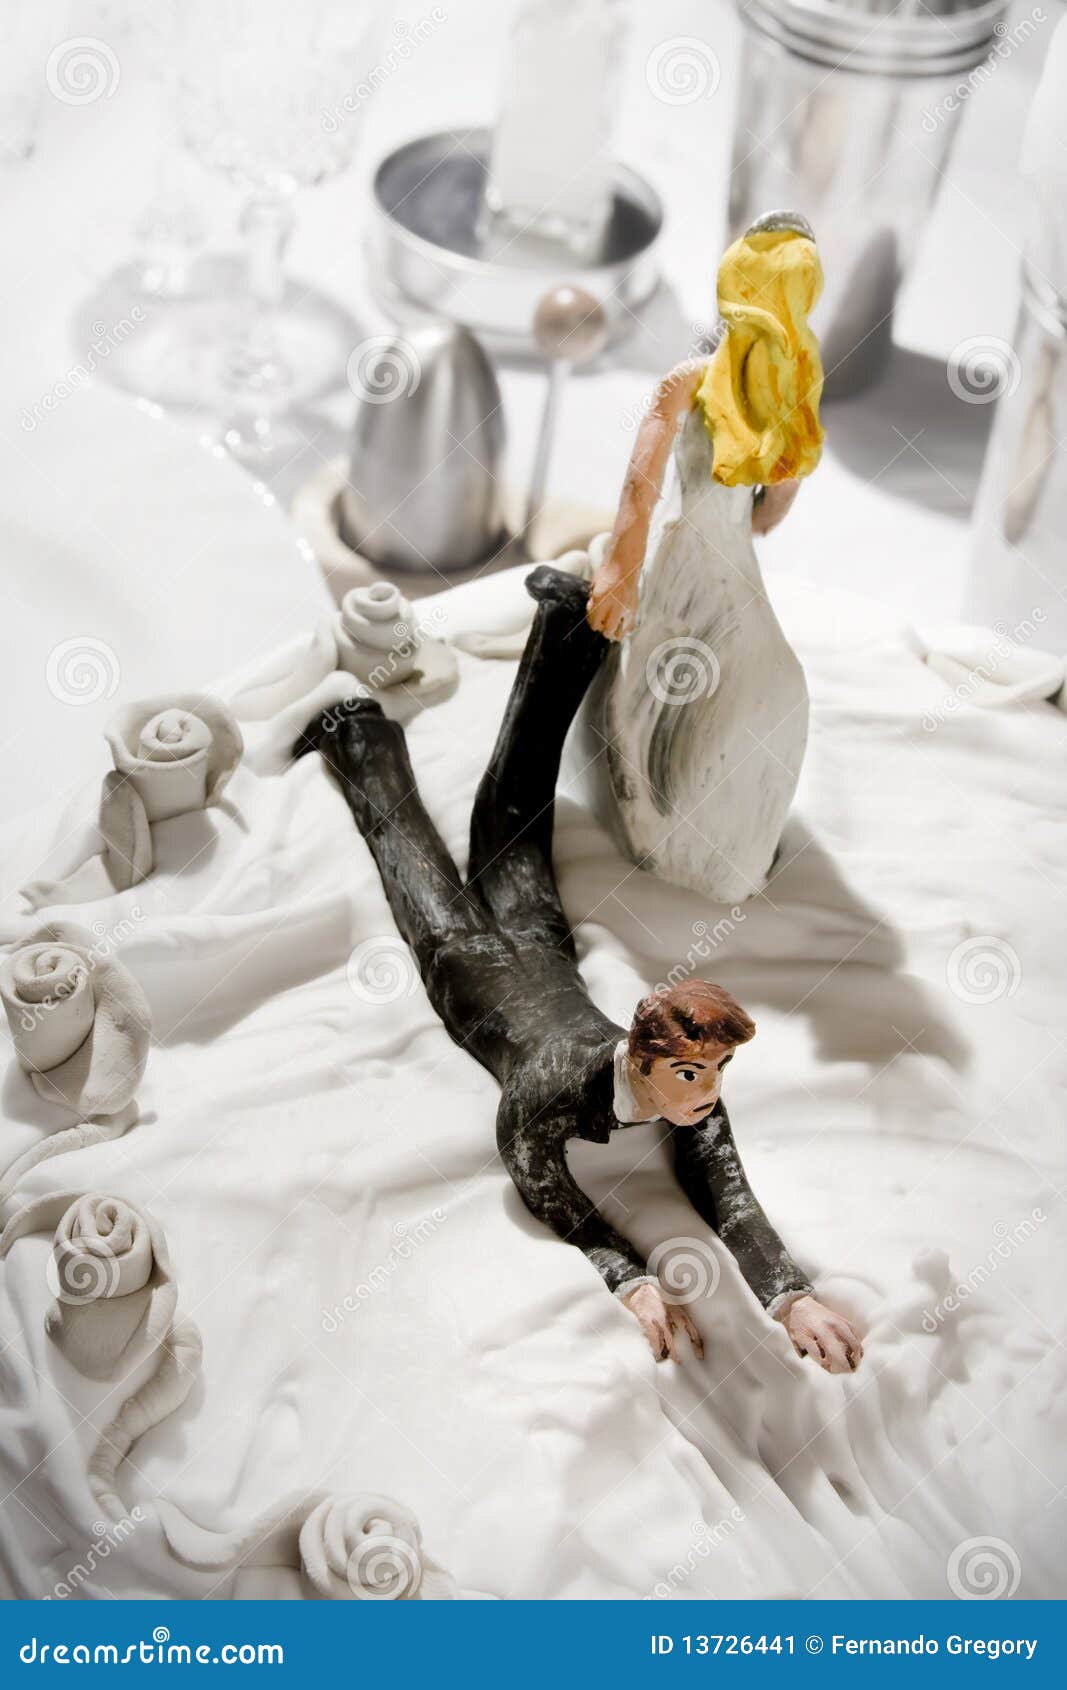 Stock Image: Funny wedding cake figurines